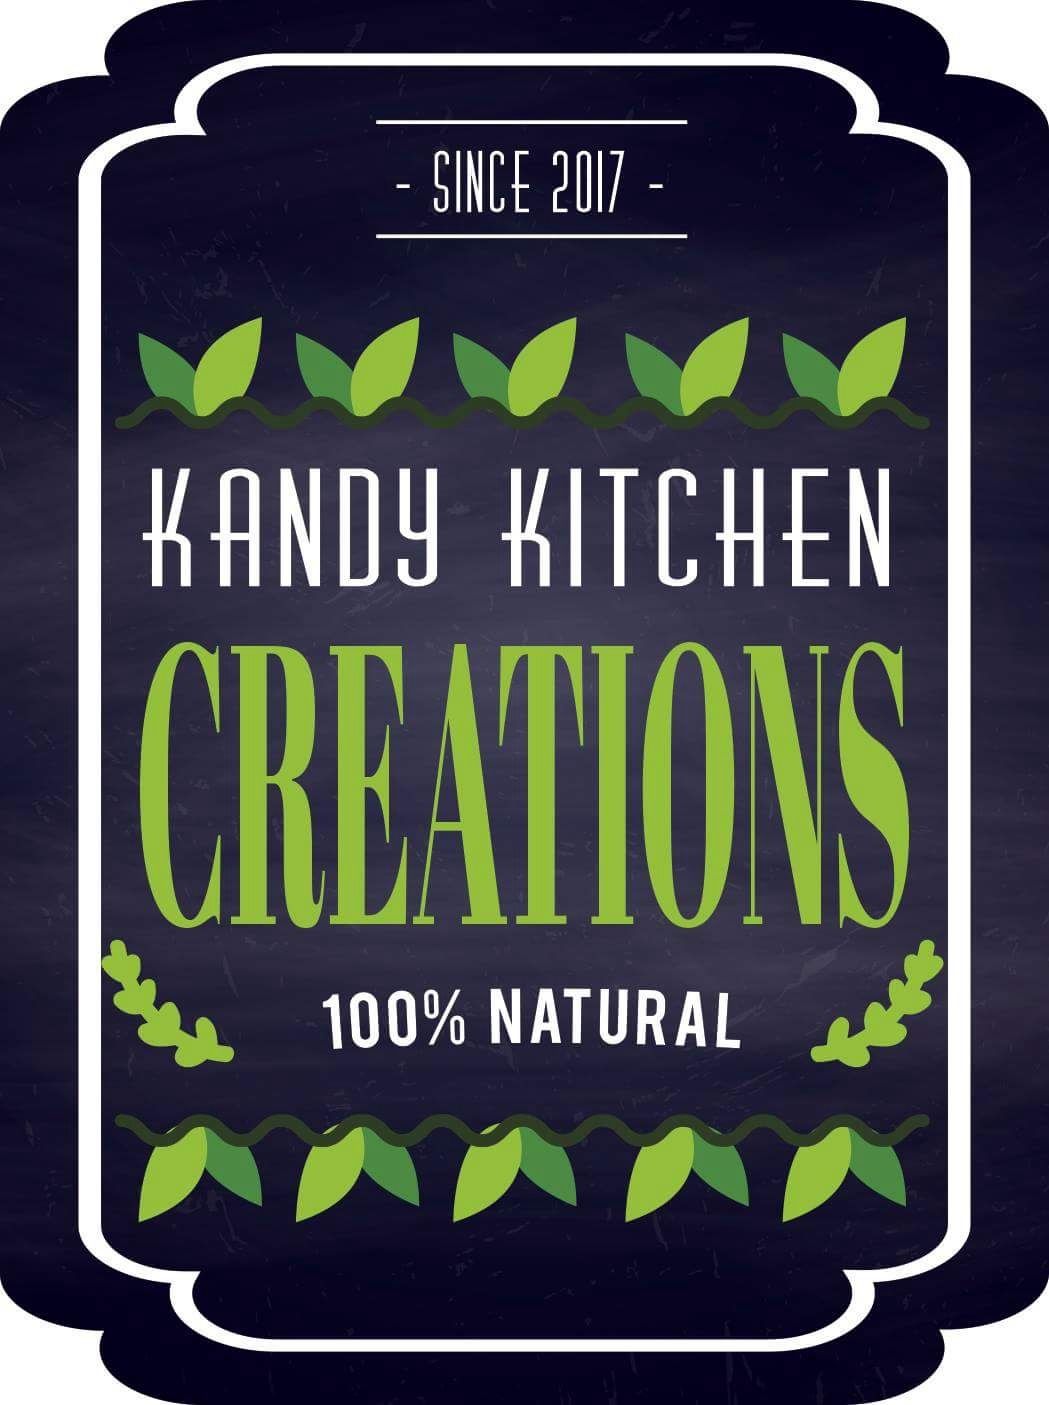 Kandy Kitchen Creations